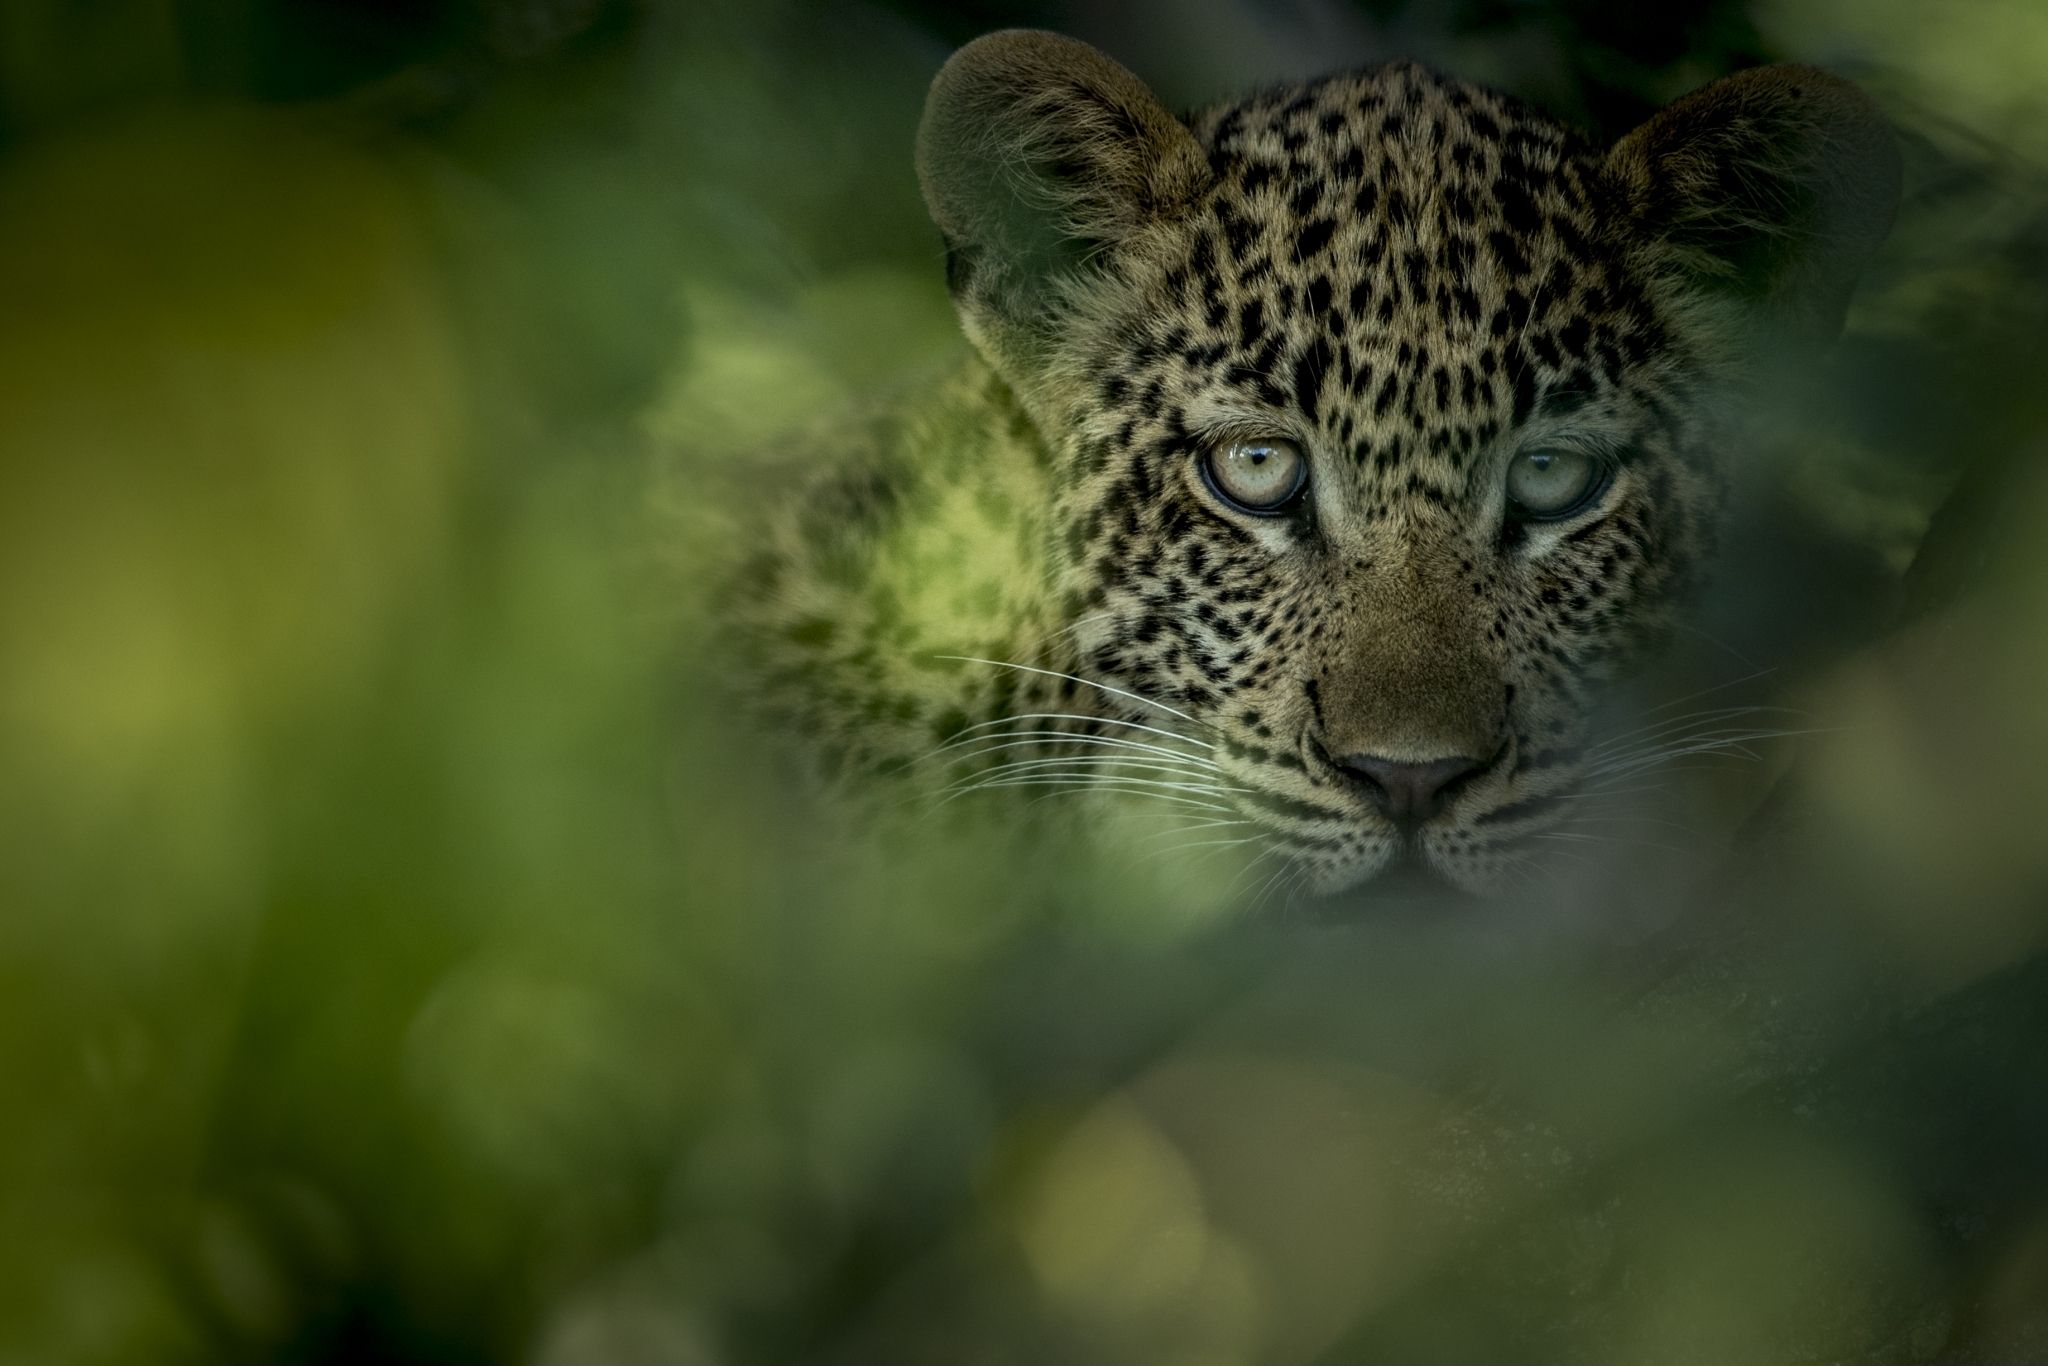 Kruger National Park animals: A jaguar peers from behind bush foliage